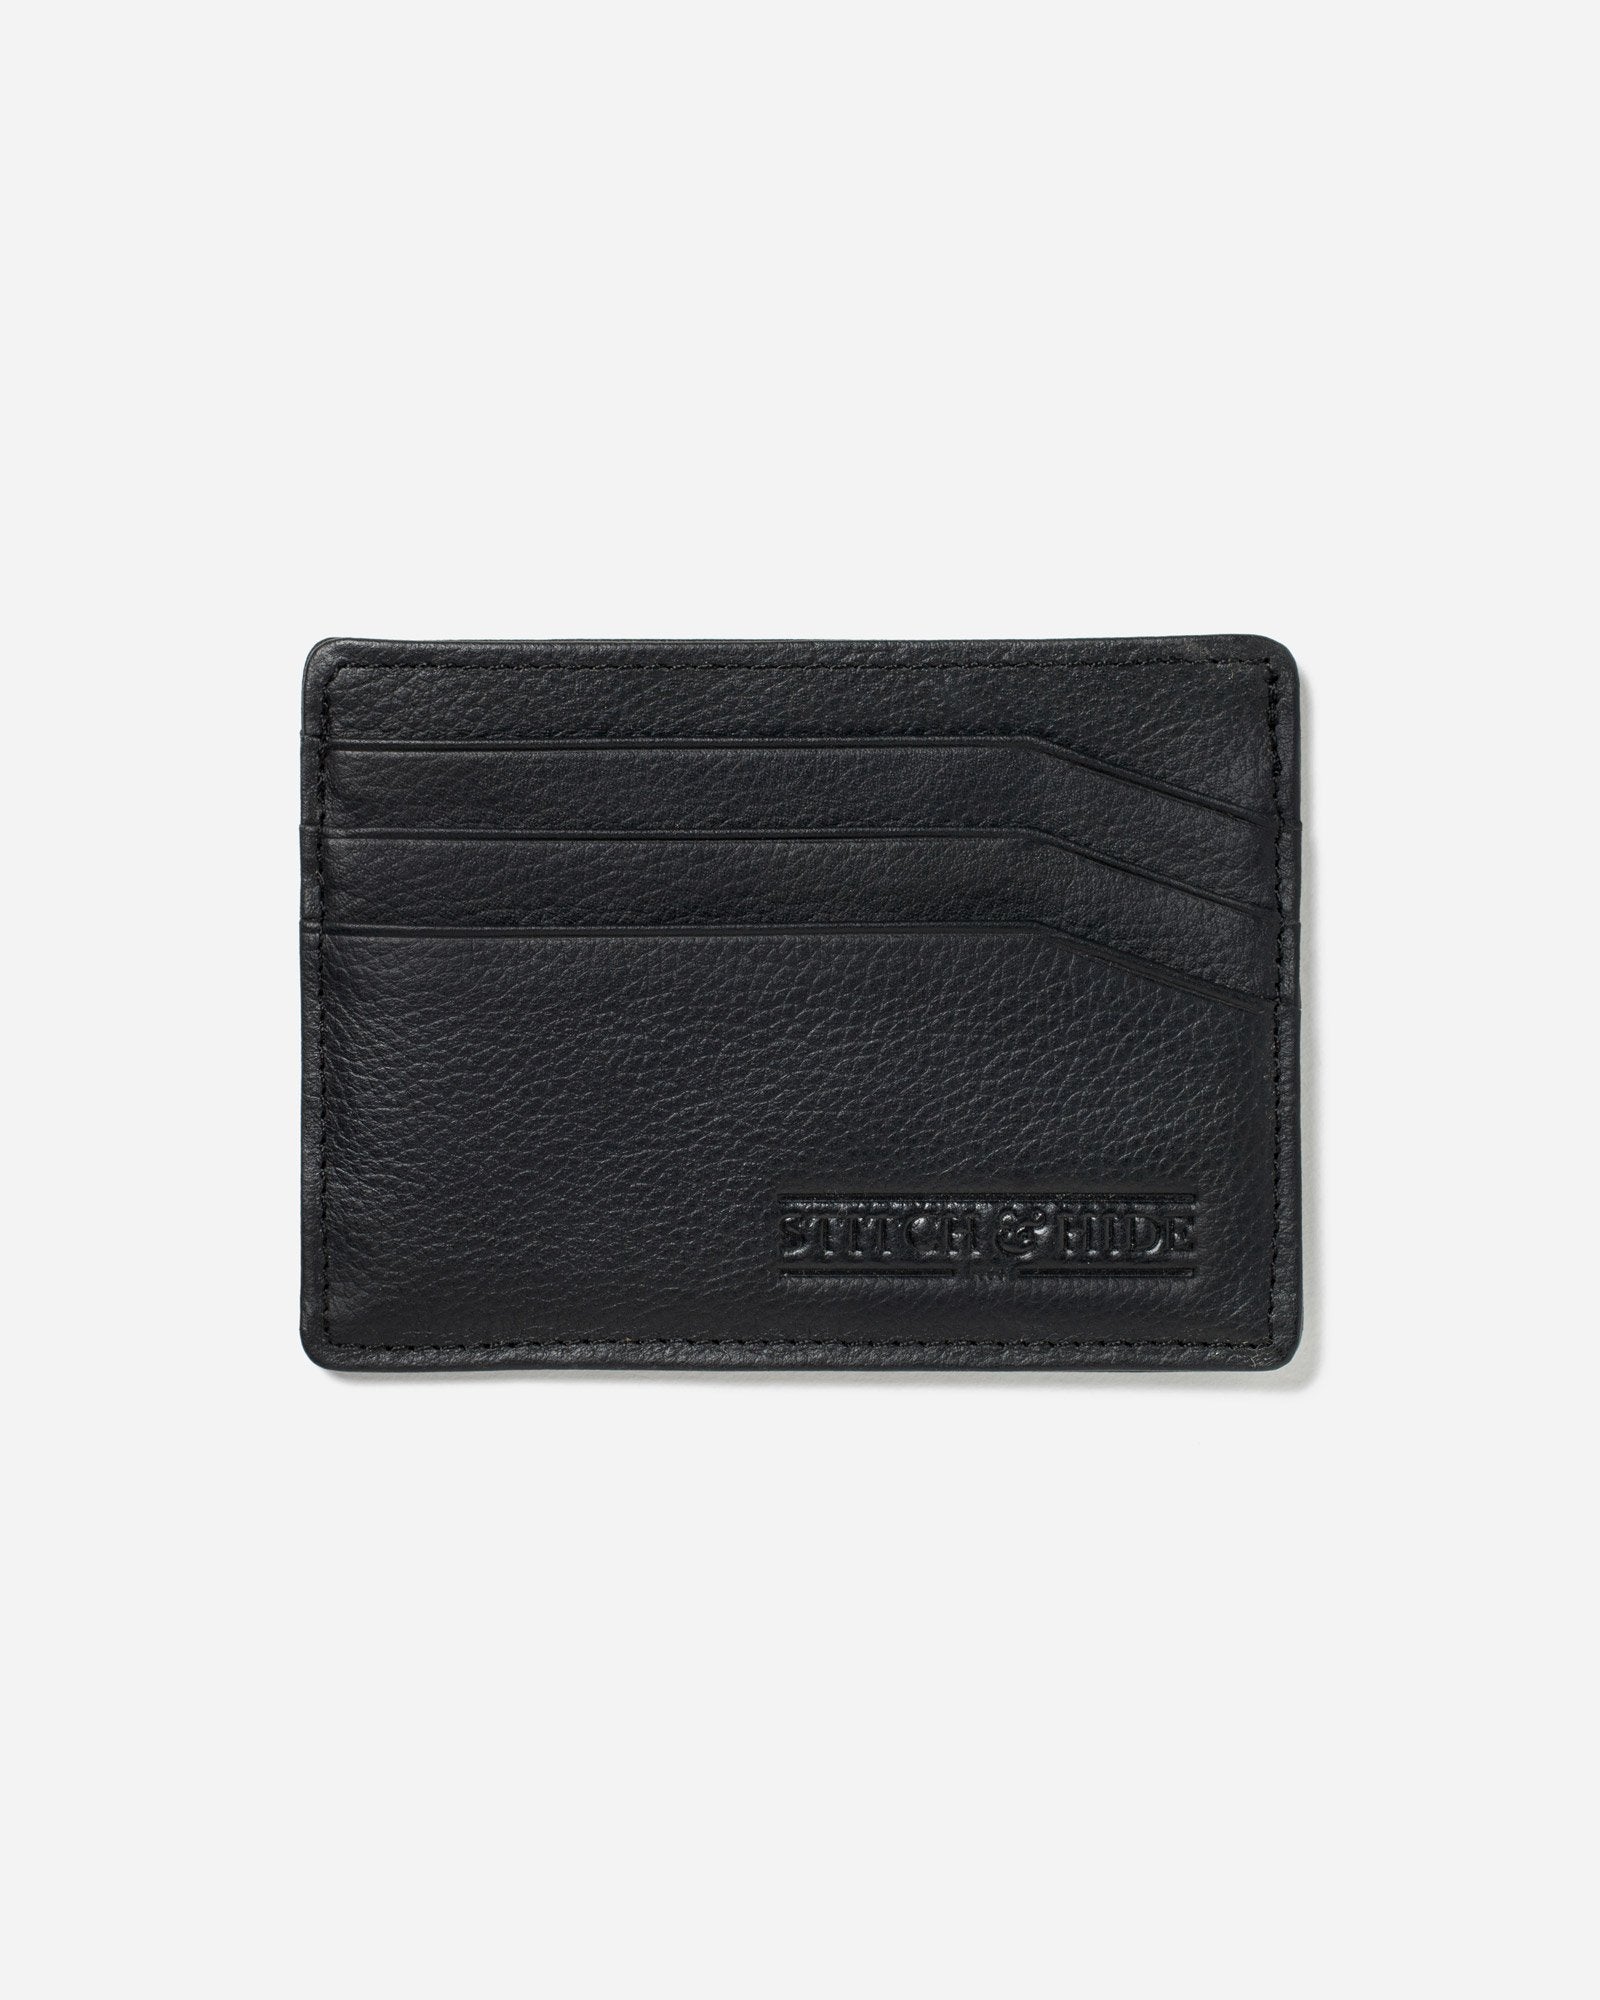 Alice Cardholder - Stitch & Hide Handbags, Wallets & Cases Stitch and Hide Black 